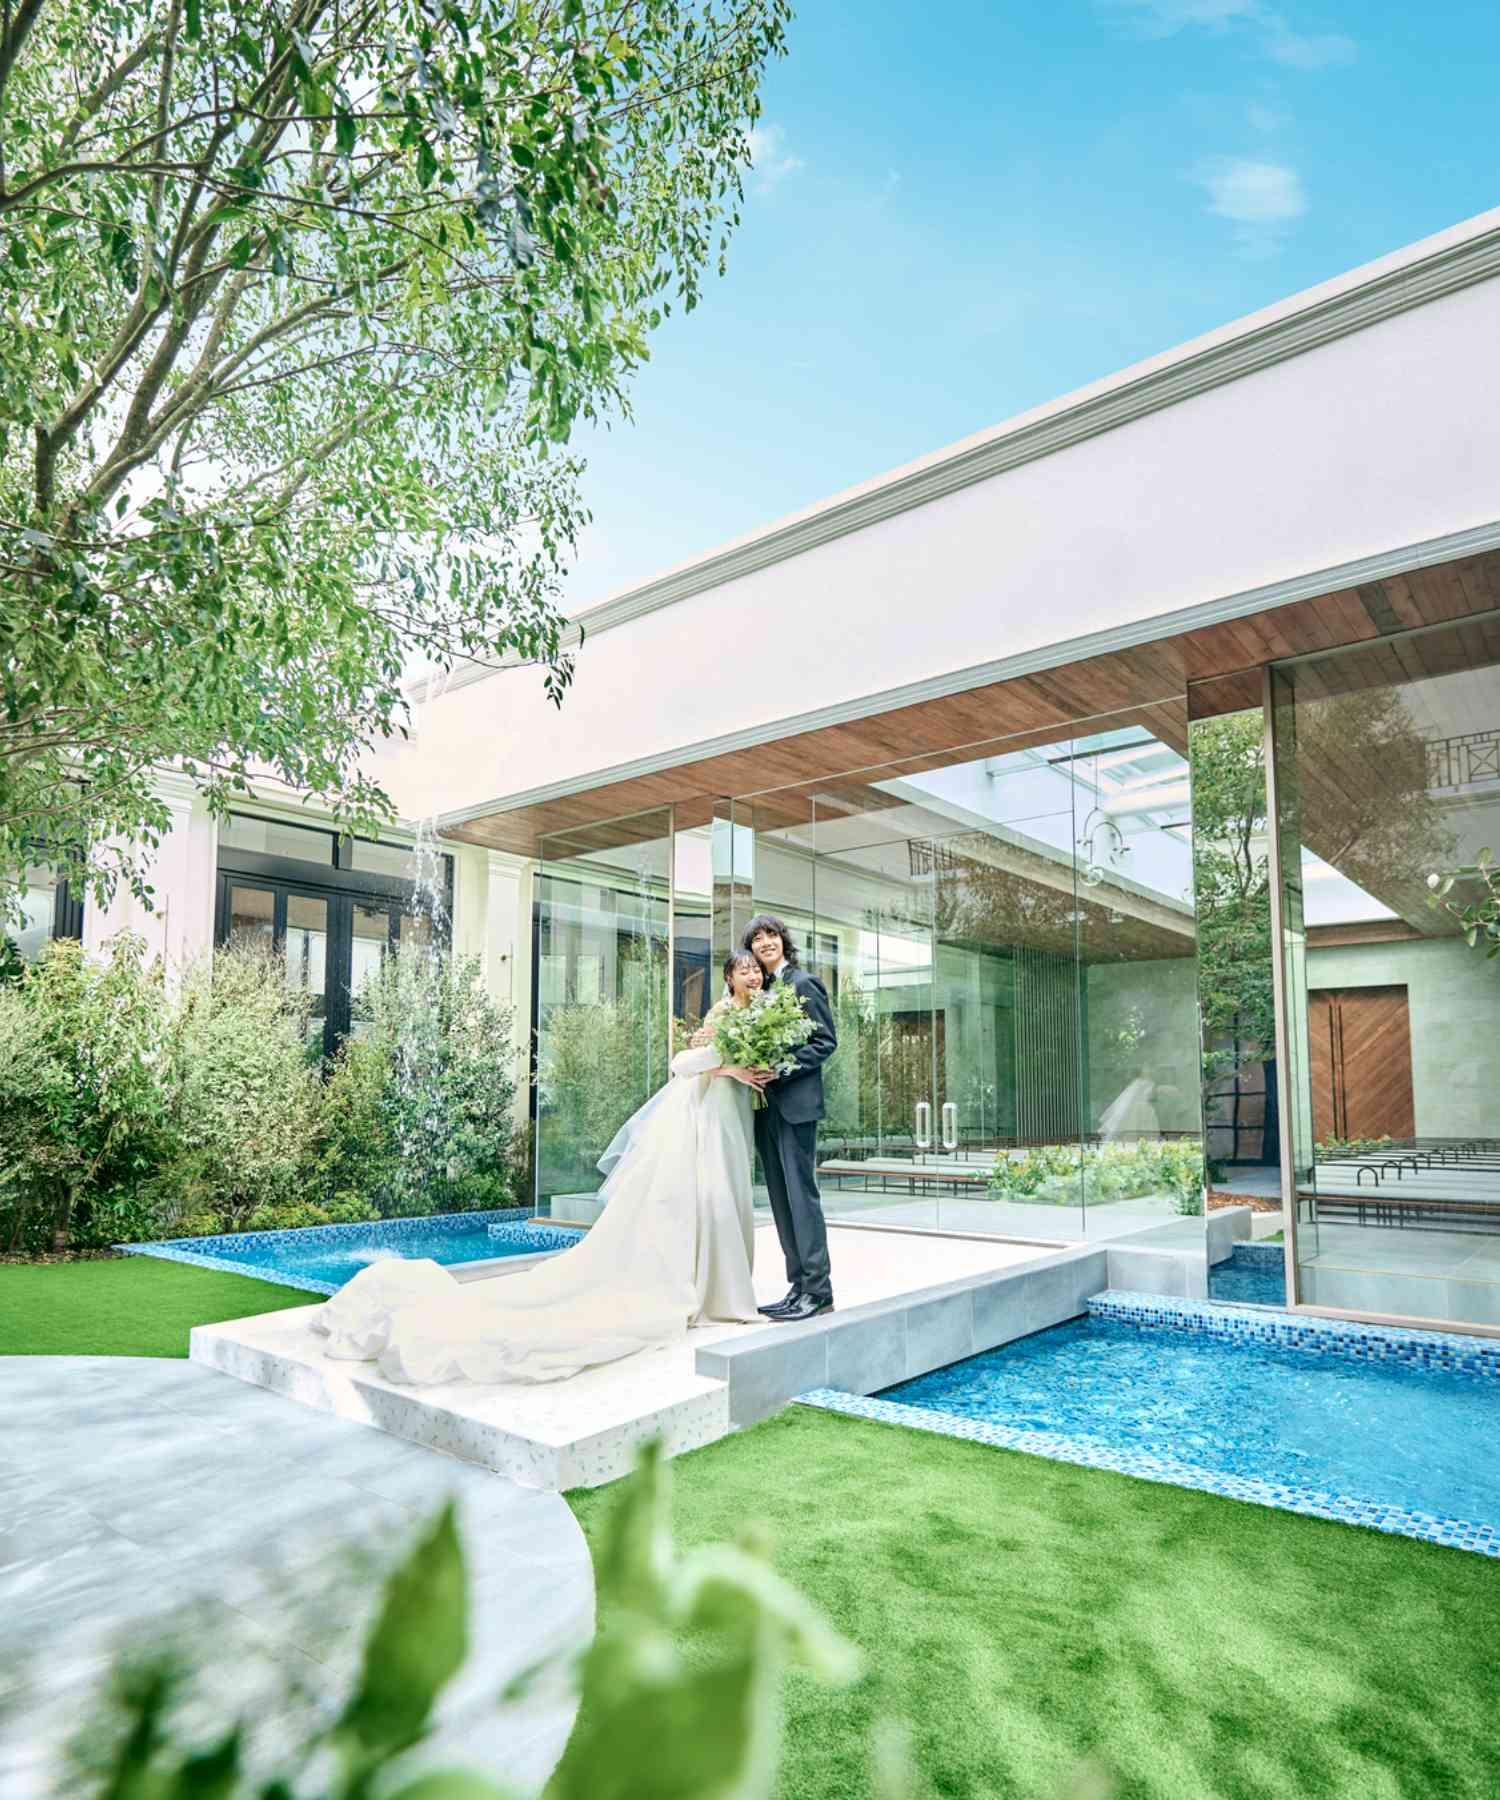 Sky Wedding アクアガーデンテラス Aqua Garden Terrace の結婚式挙式実例 結婚式場探しはハナユメ